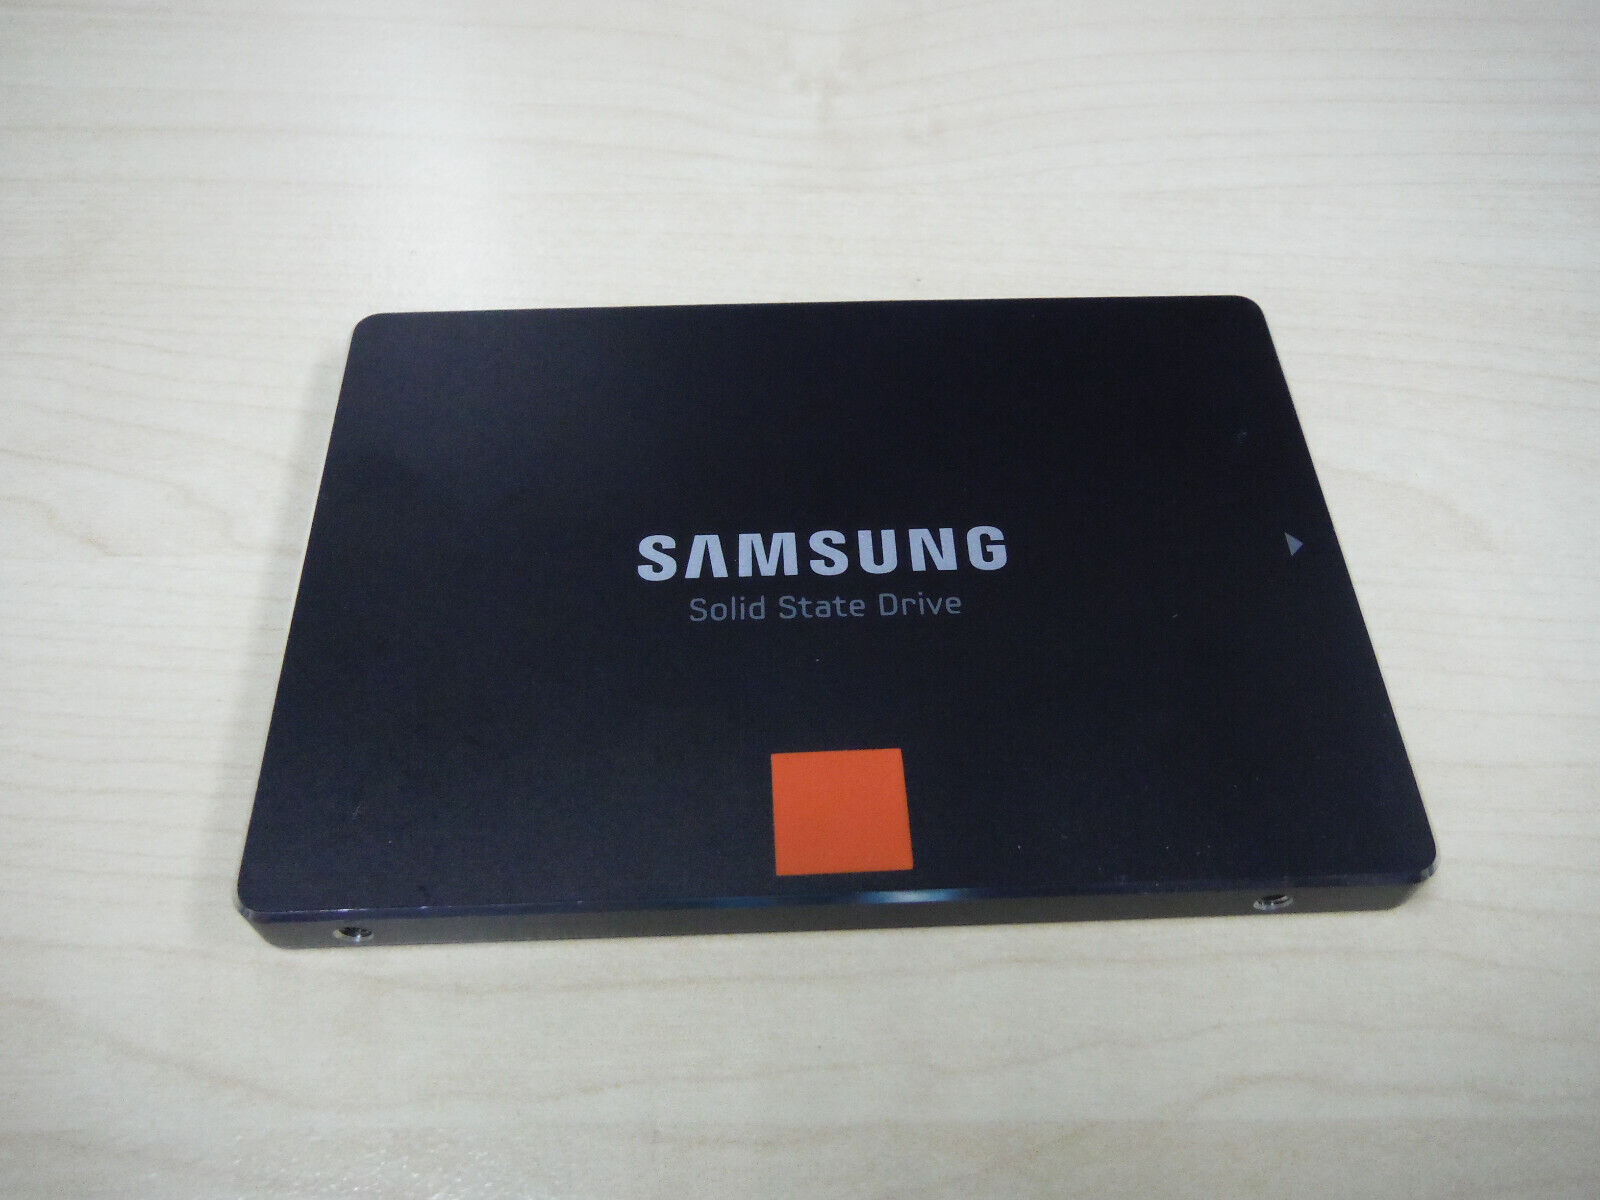 Samsung SSD 840 PRO 256GB  with Windows 11 Pro 64-Bit Preloaded